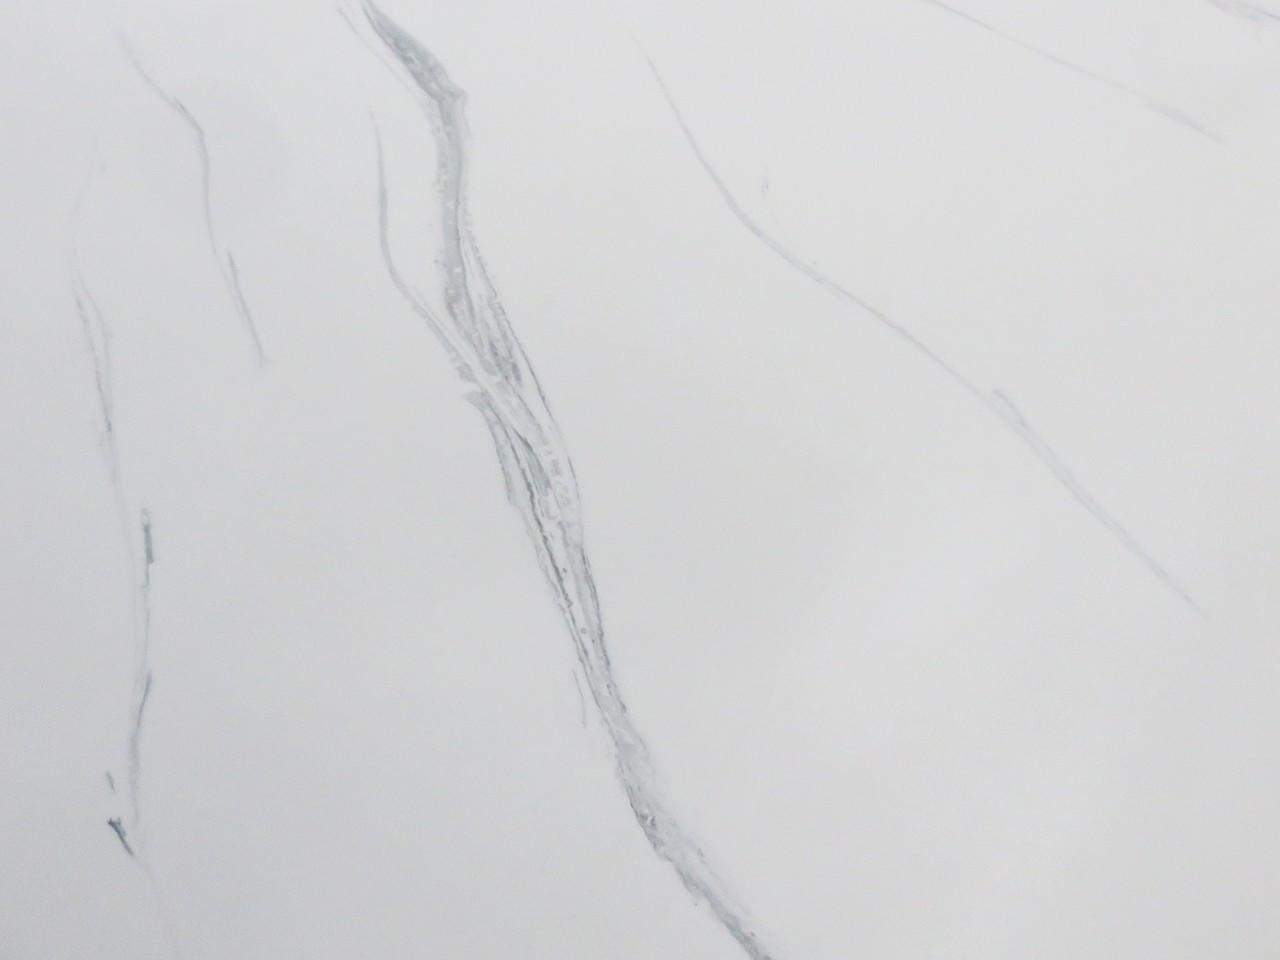 KingKonree marble solid surface countertop sheets black for home